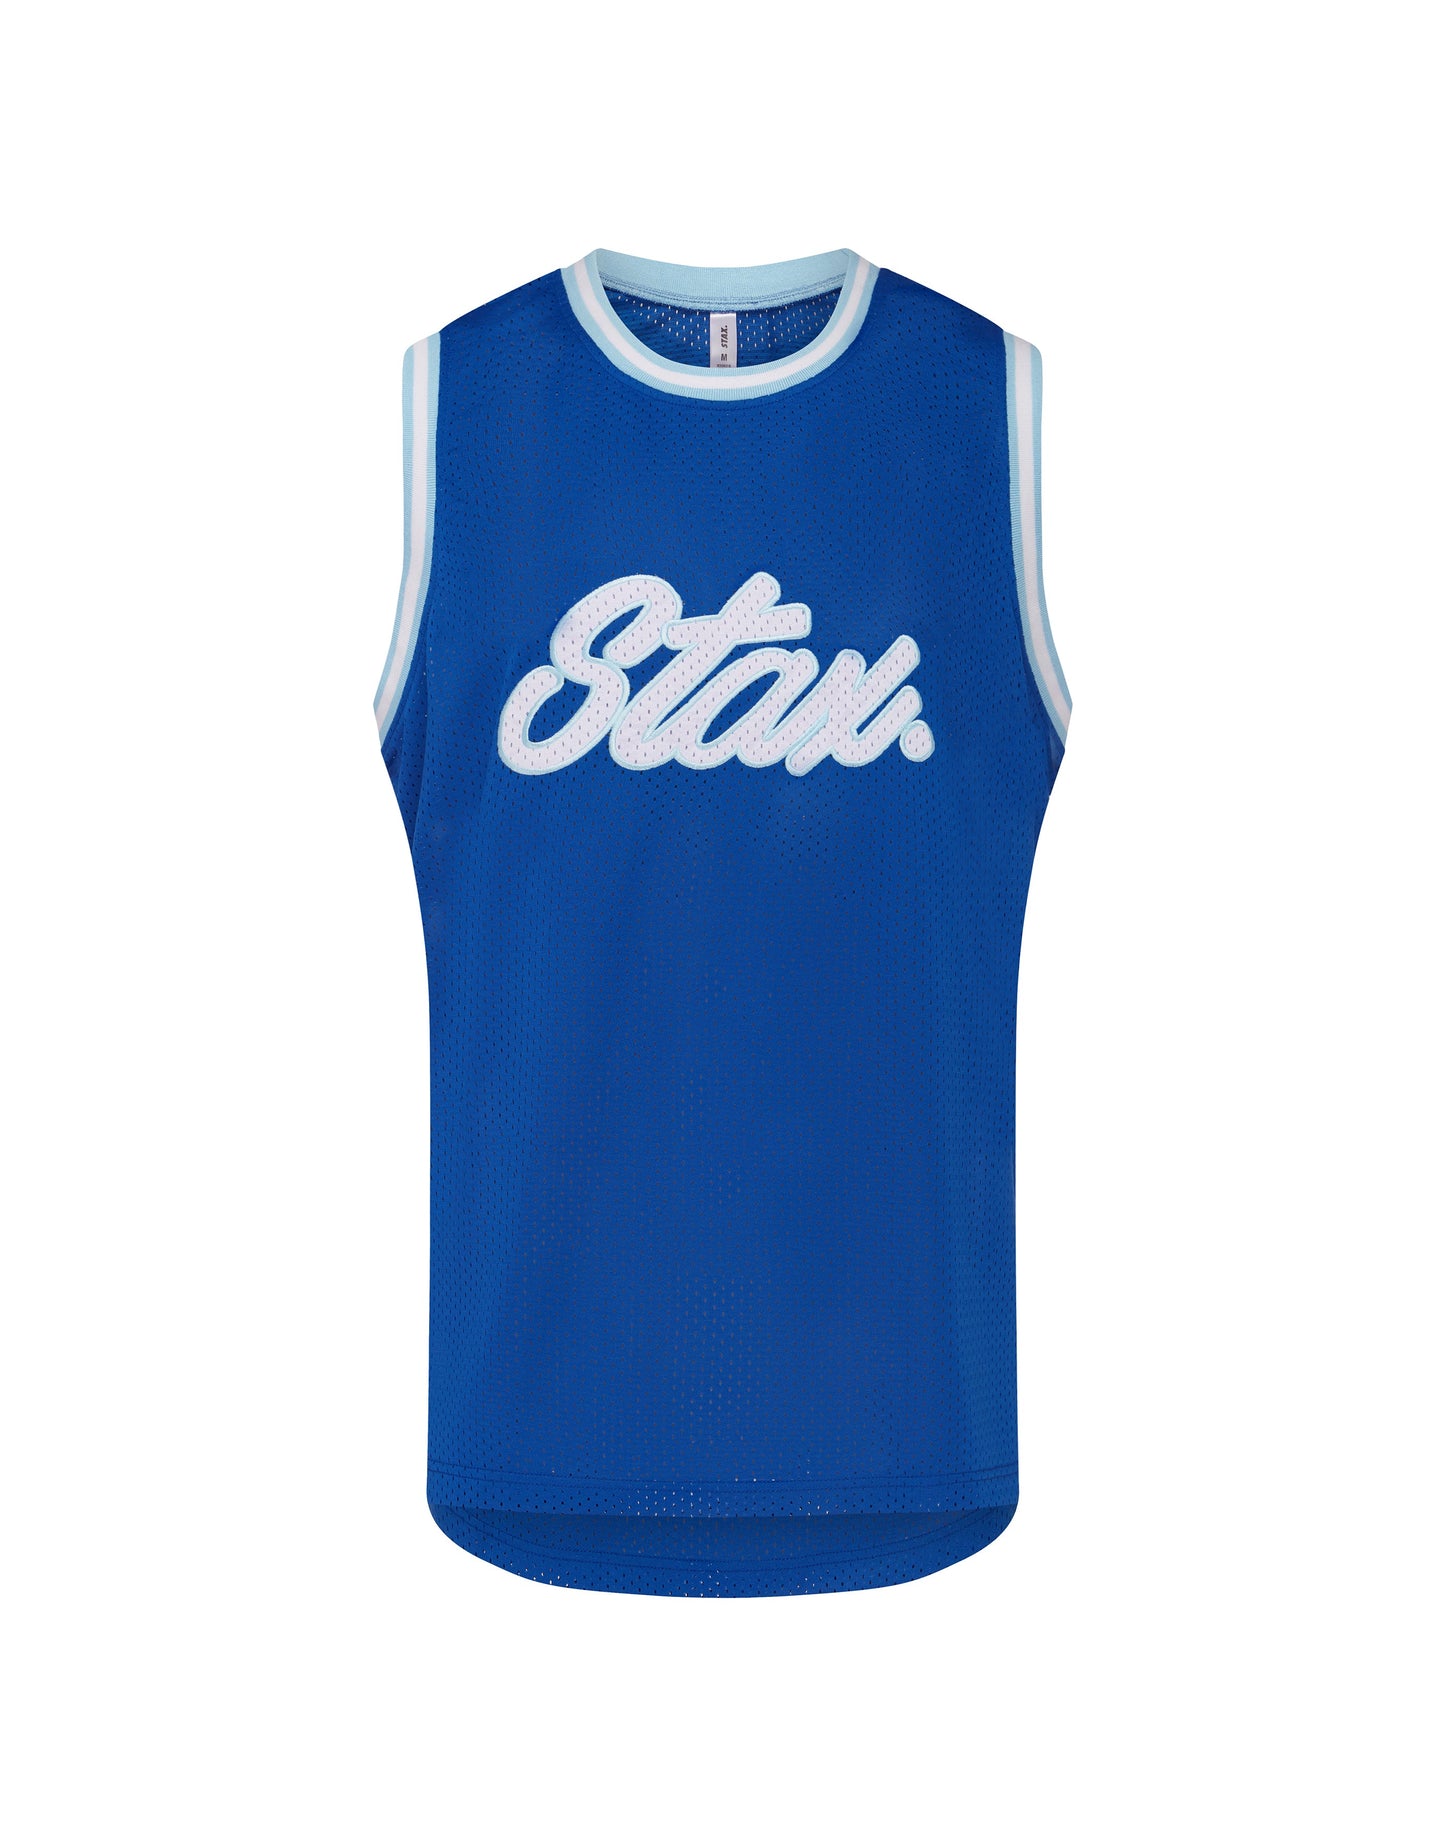 STAX. Court Drip Basketball Singlet - Duke